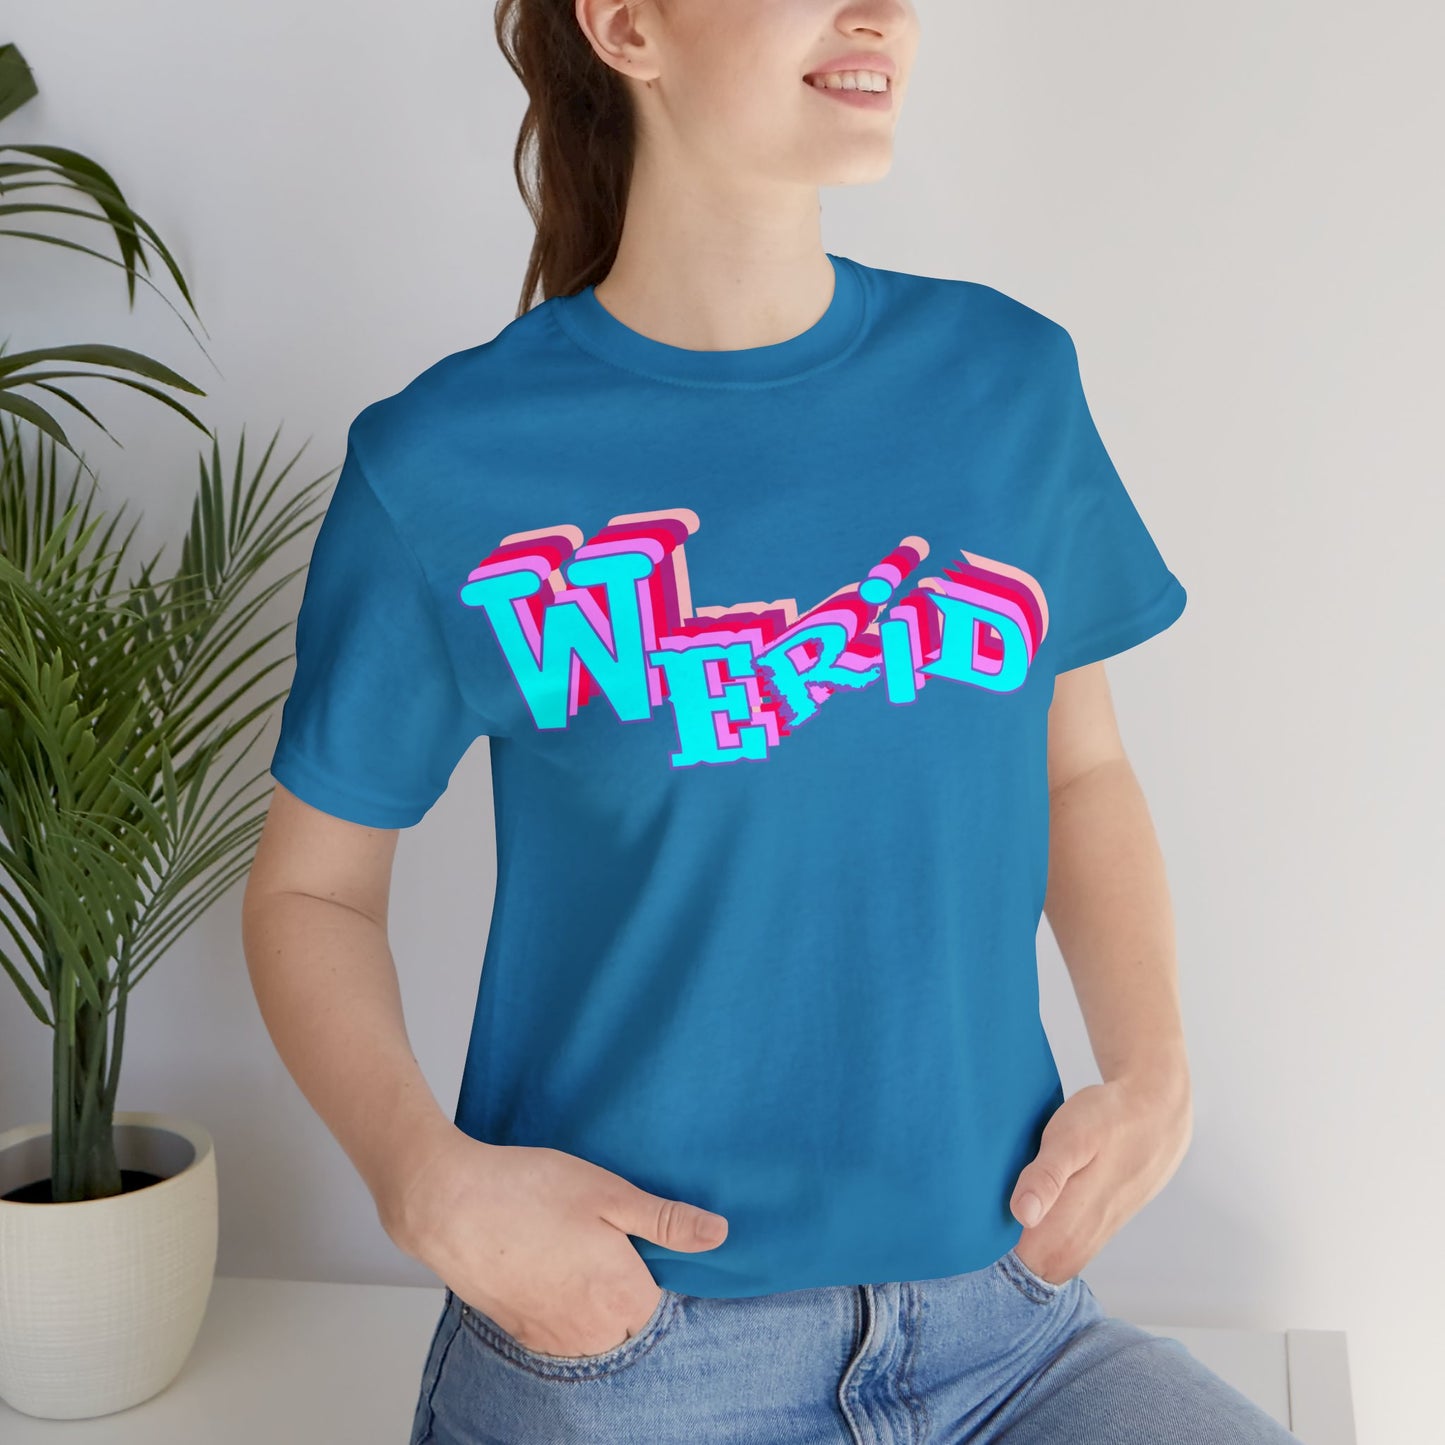 Weird Shirts - Hurts Shirts Collection